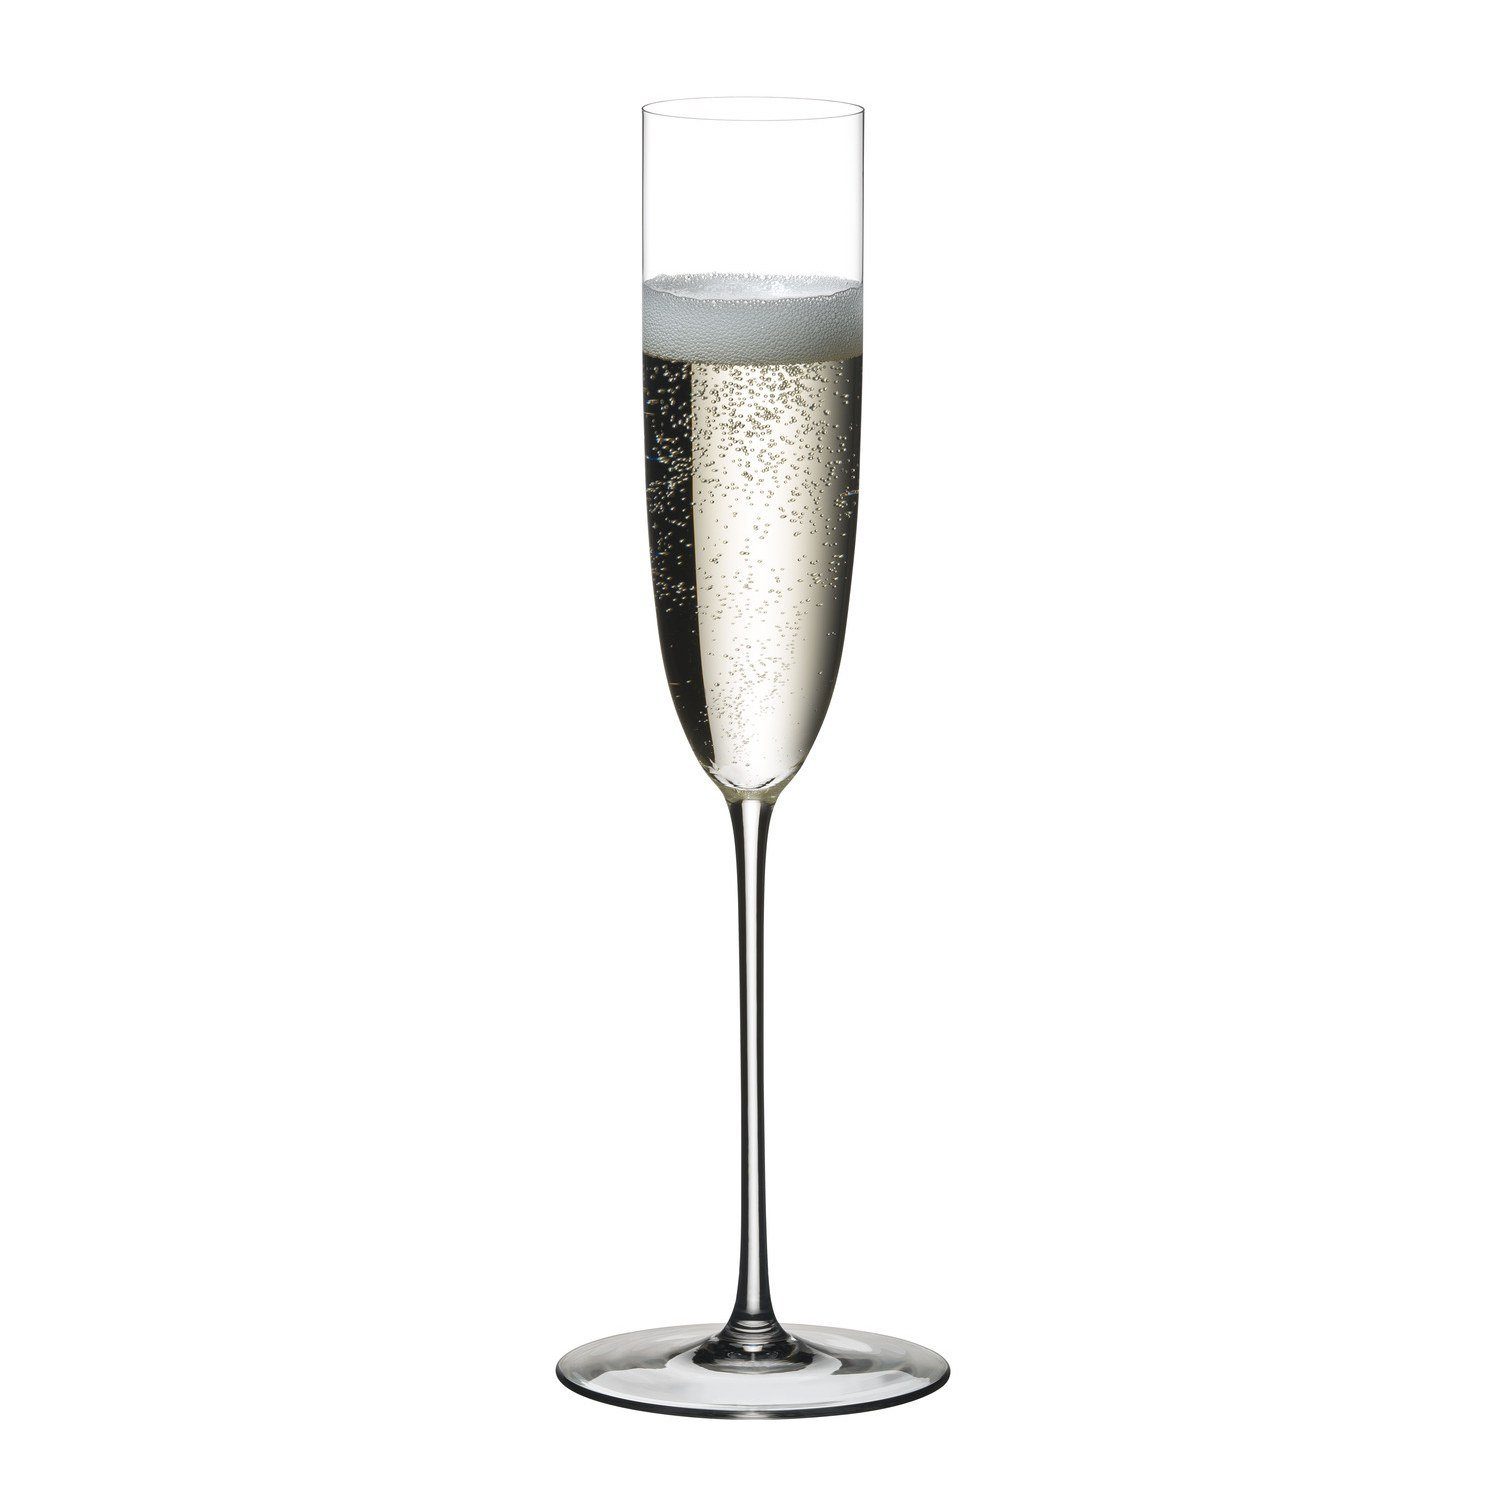 RIEDEL Glas Champagnerglas Superleggero Champagner Flöte, Kristallglas